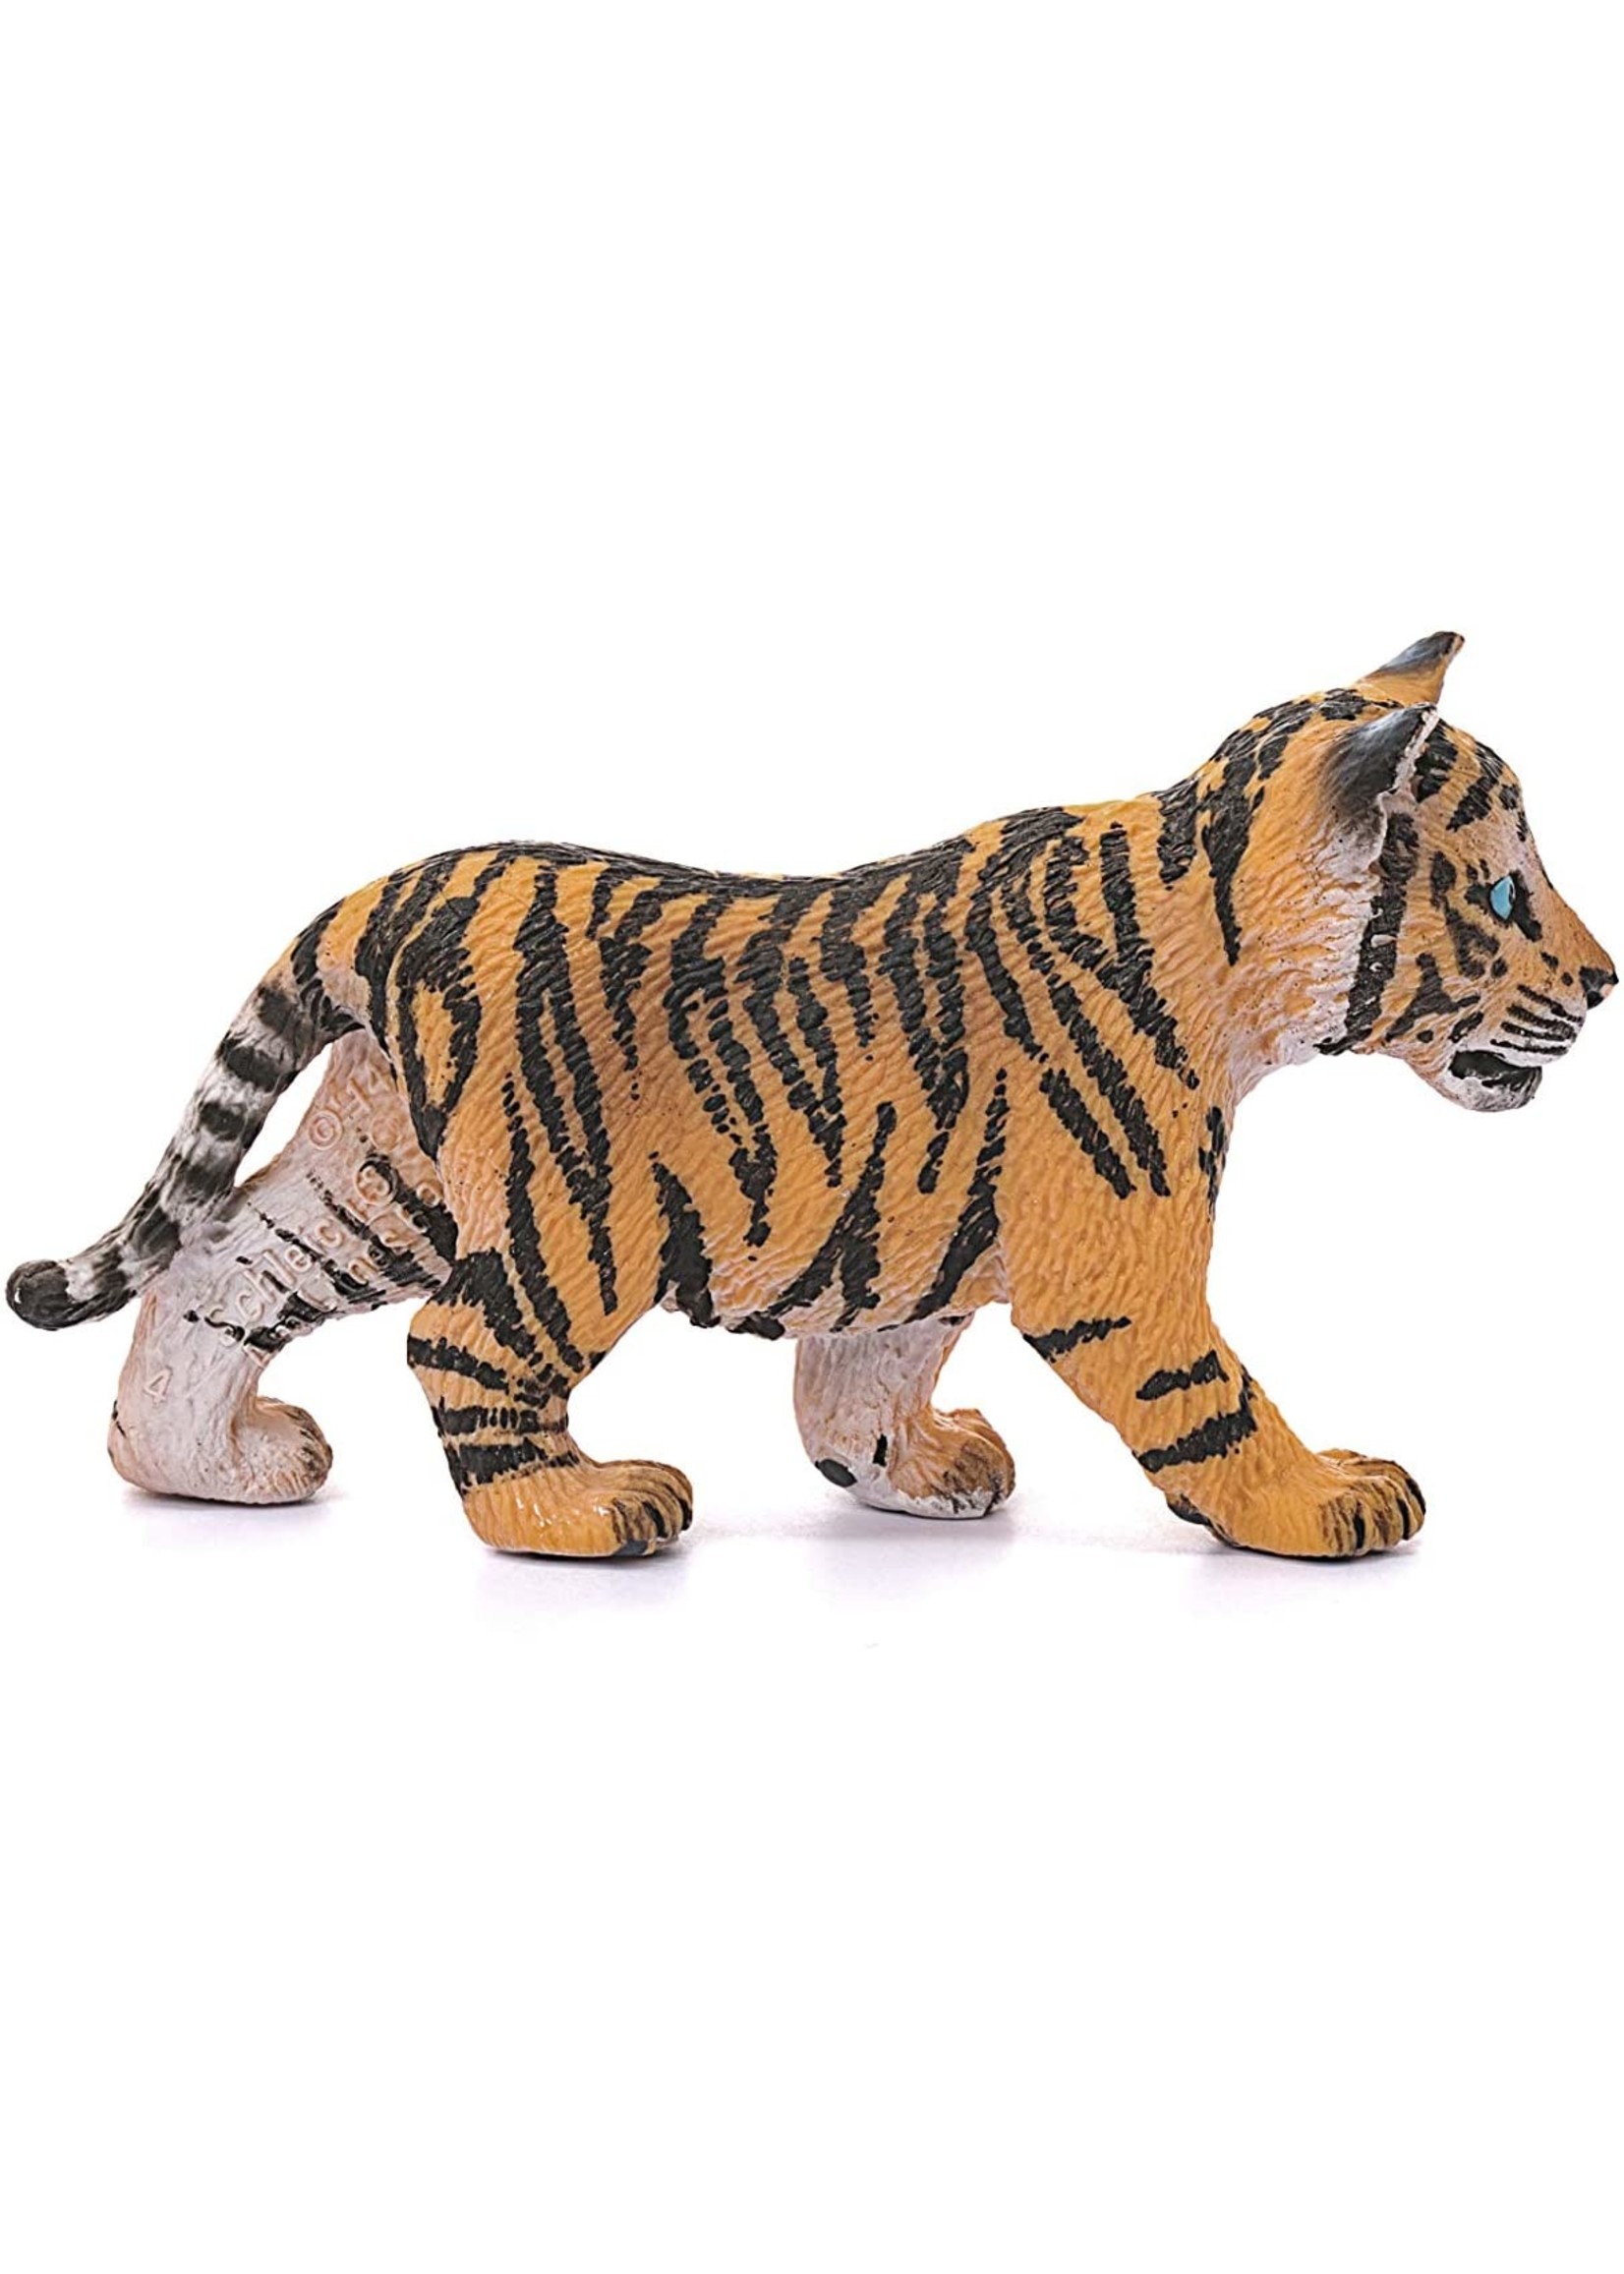 Schleich 14730 - Tiger Cub